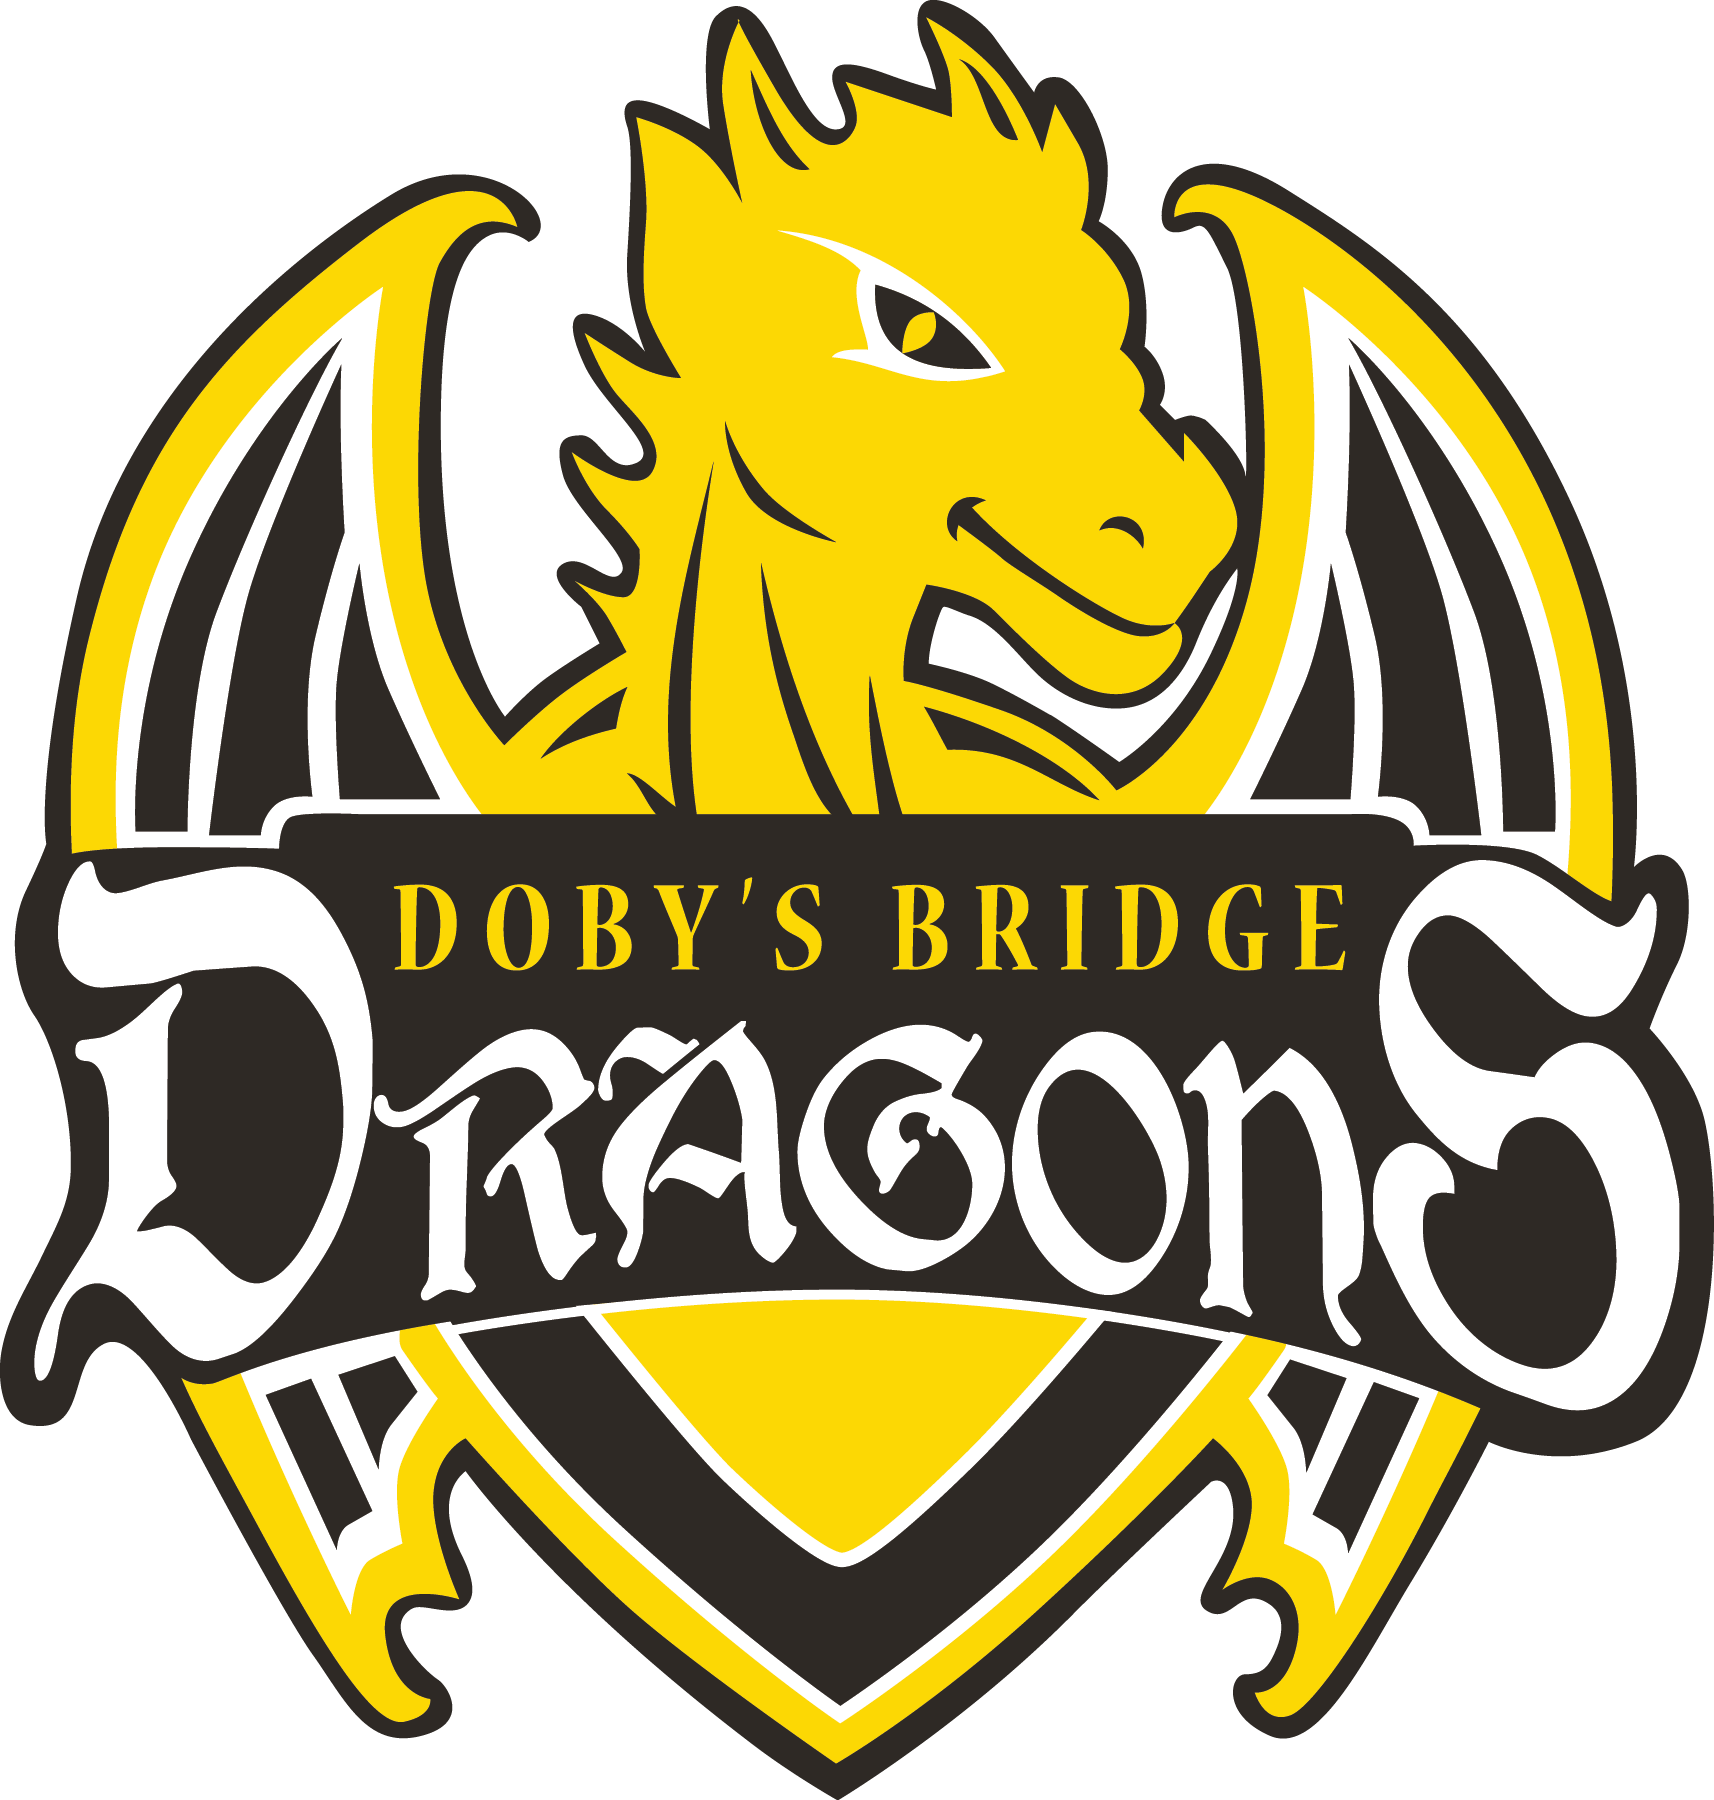 School Dragon Logo - Home - Doby's Bridge Elementary School